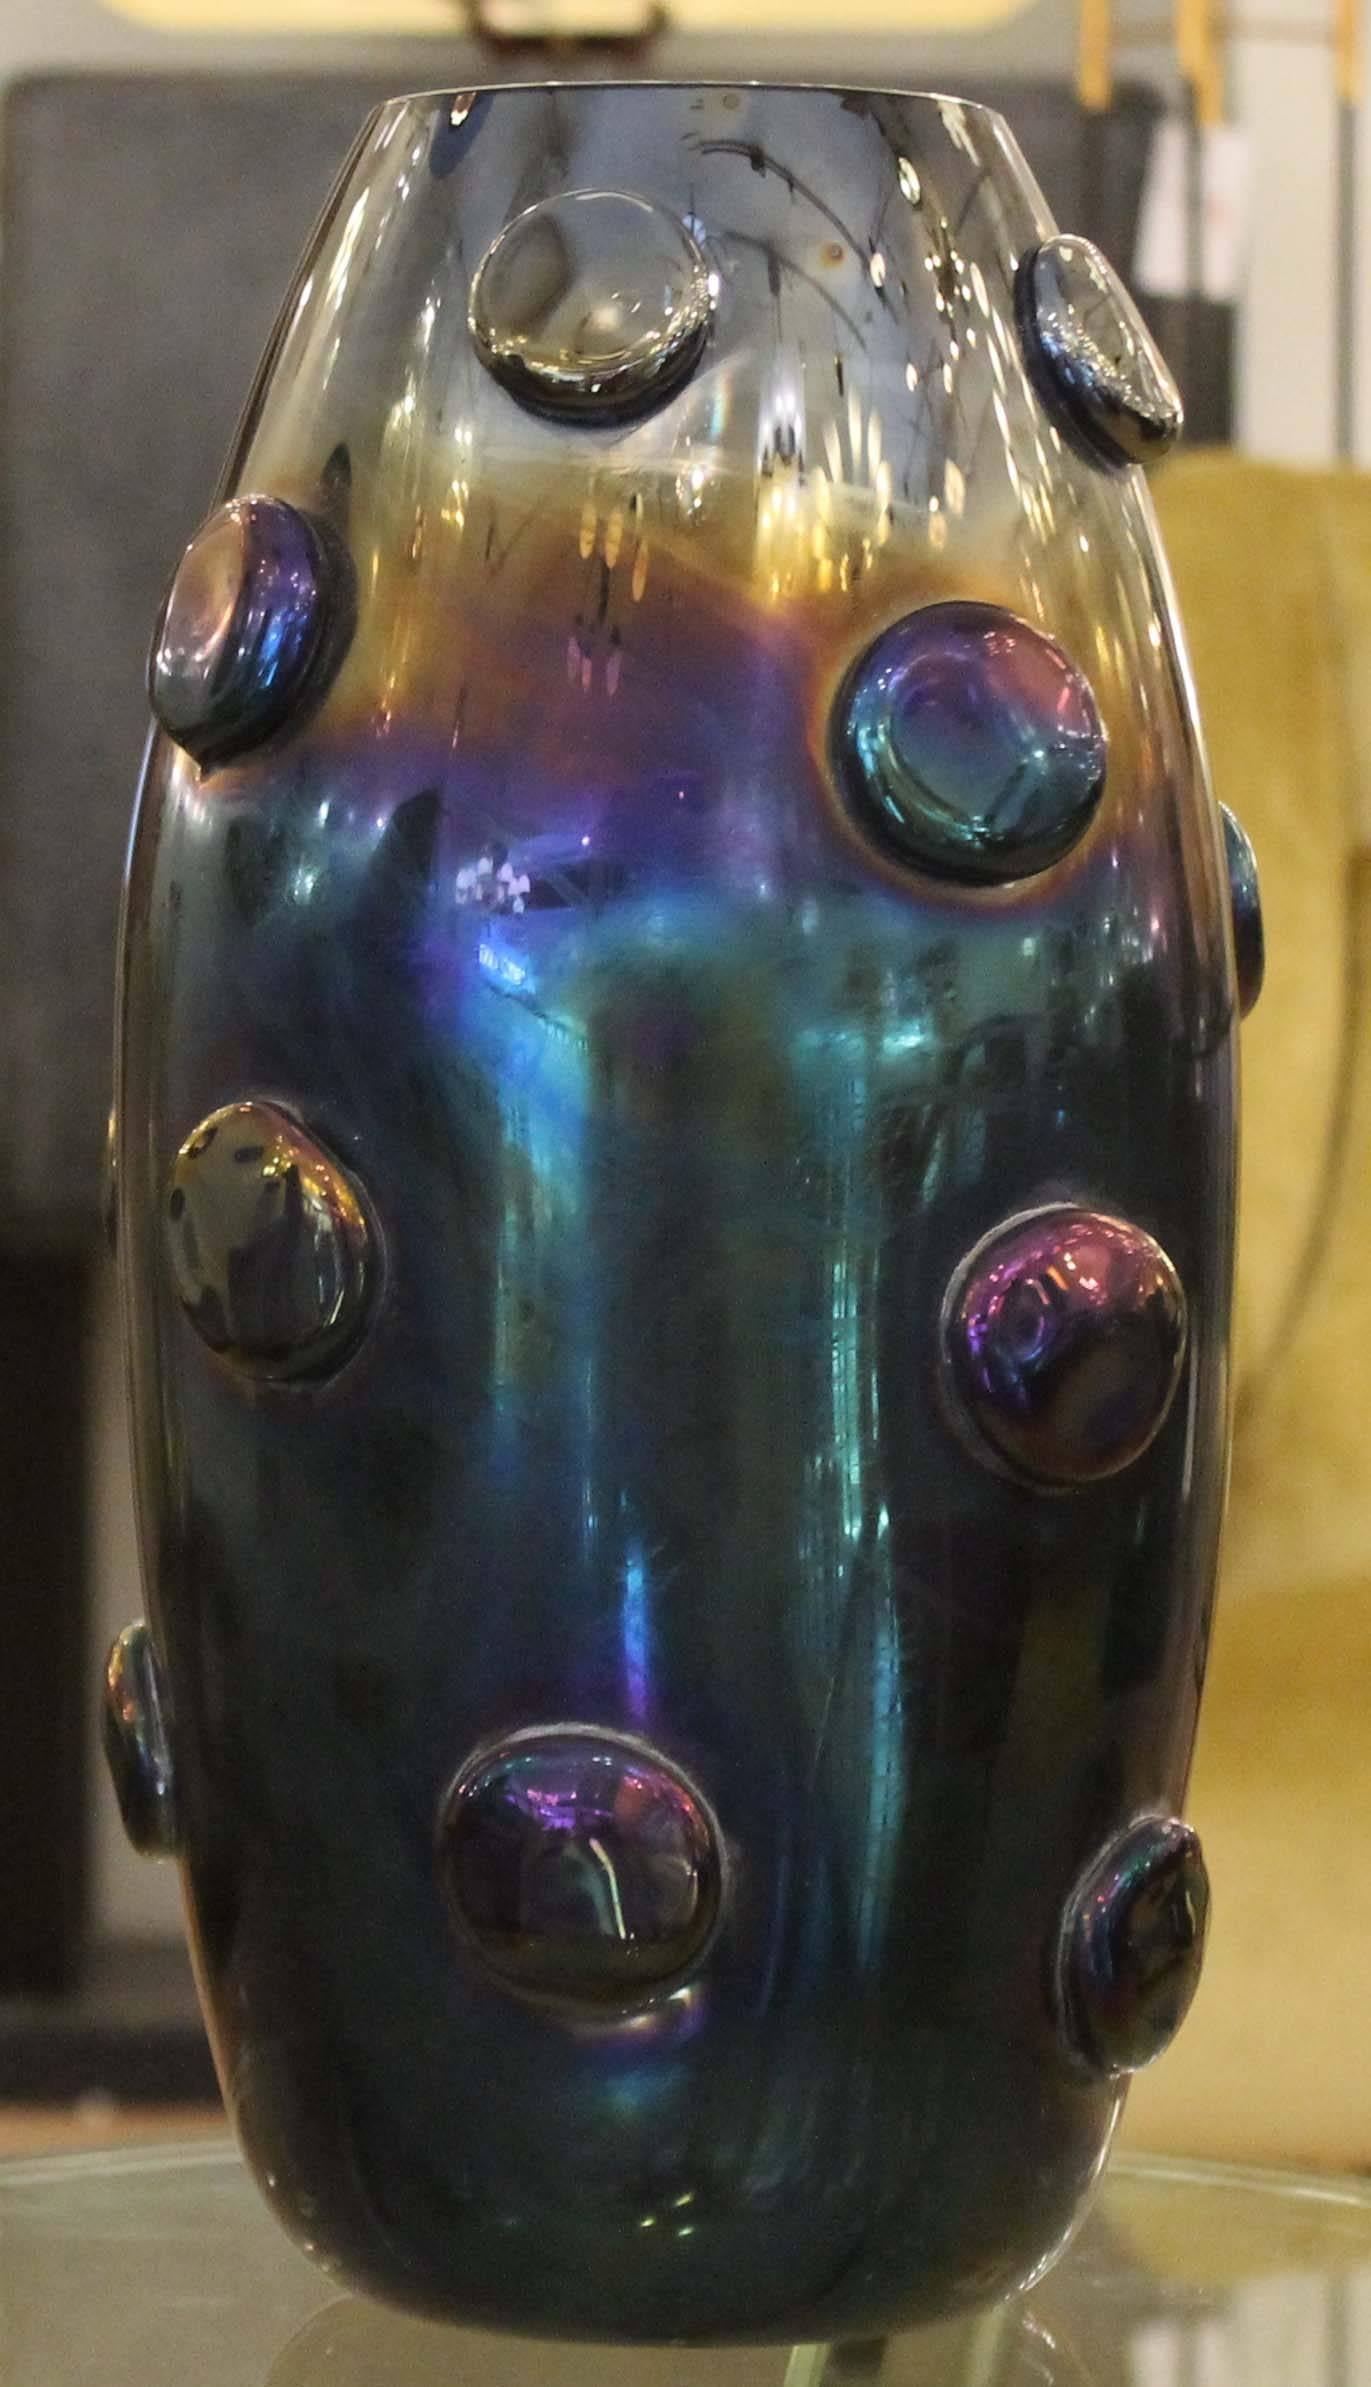 Geheimnisvoll schillernde Vase des Murano-Glasbläsers Alberto Dona.
Unten signiert.